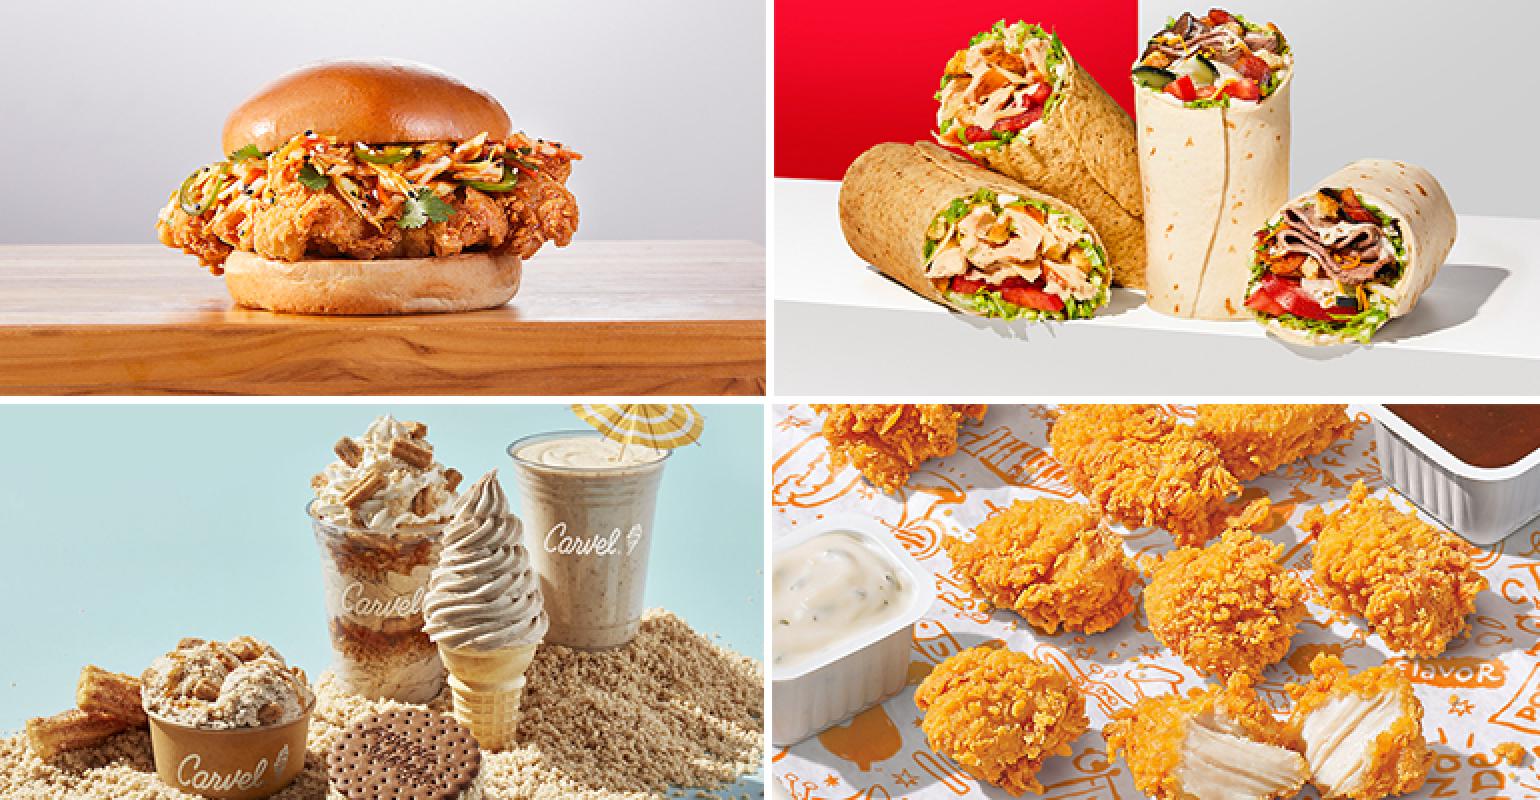 Slideshow: New menu items from IHOP, Applebee's and Popeyes